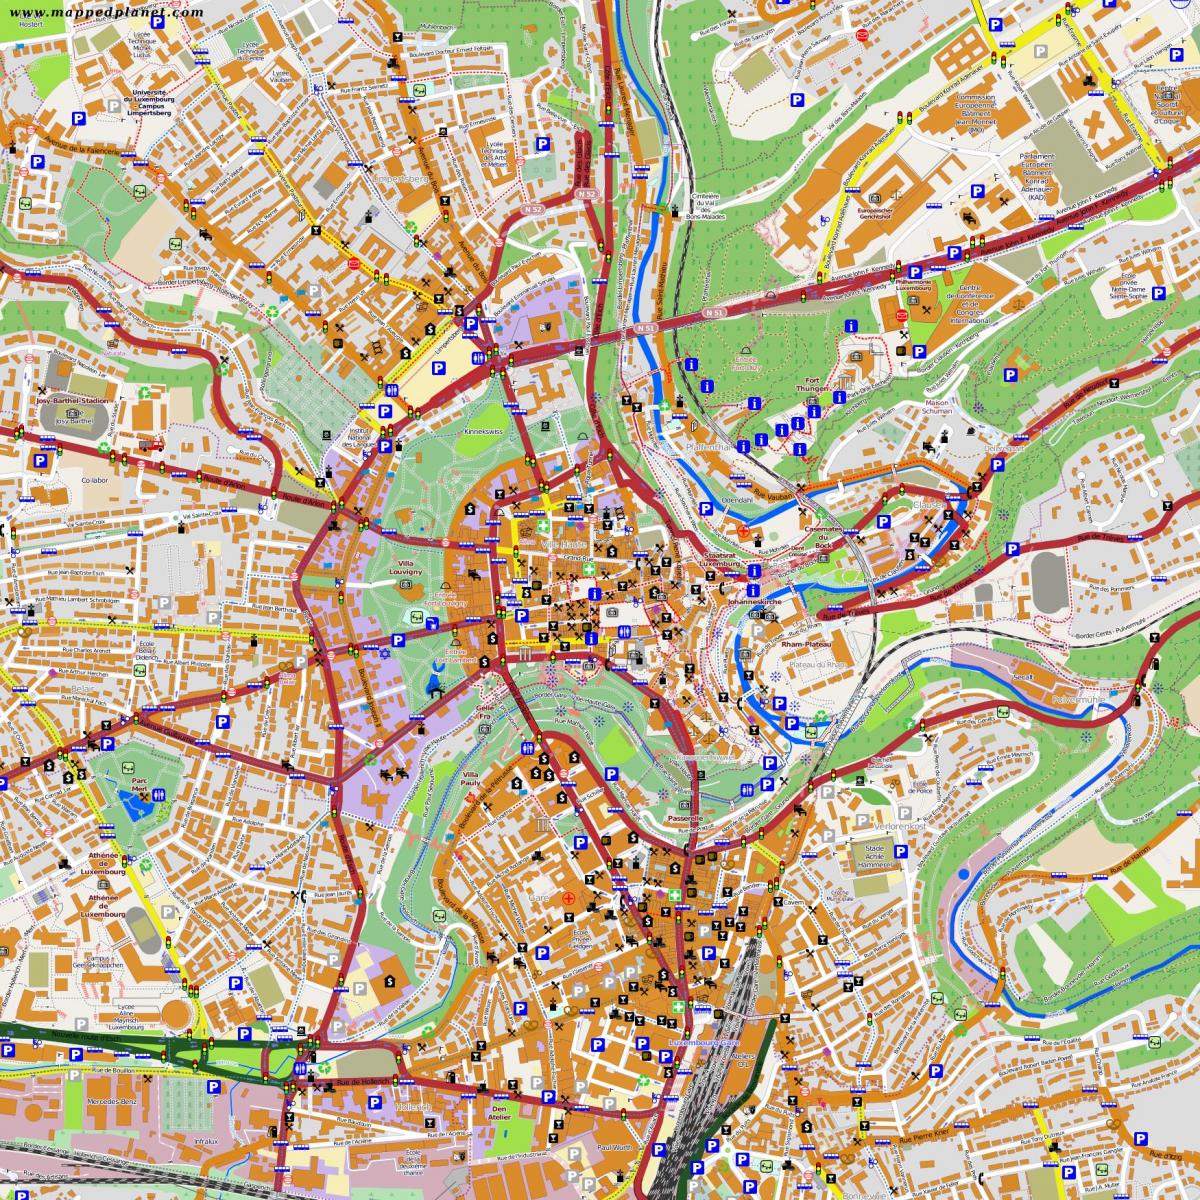 kort over Luxembourg centrum